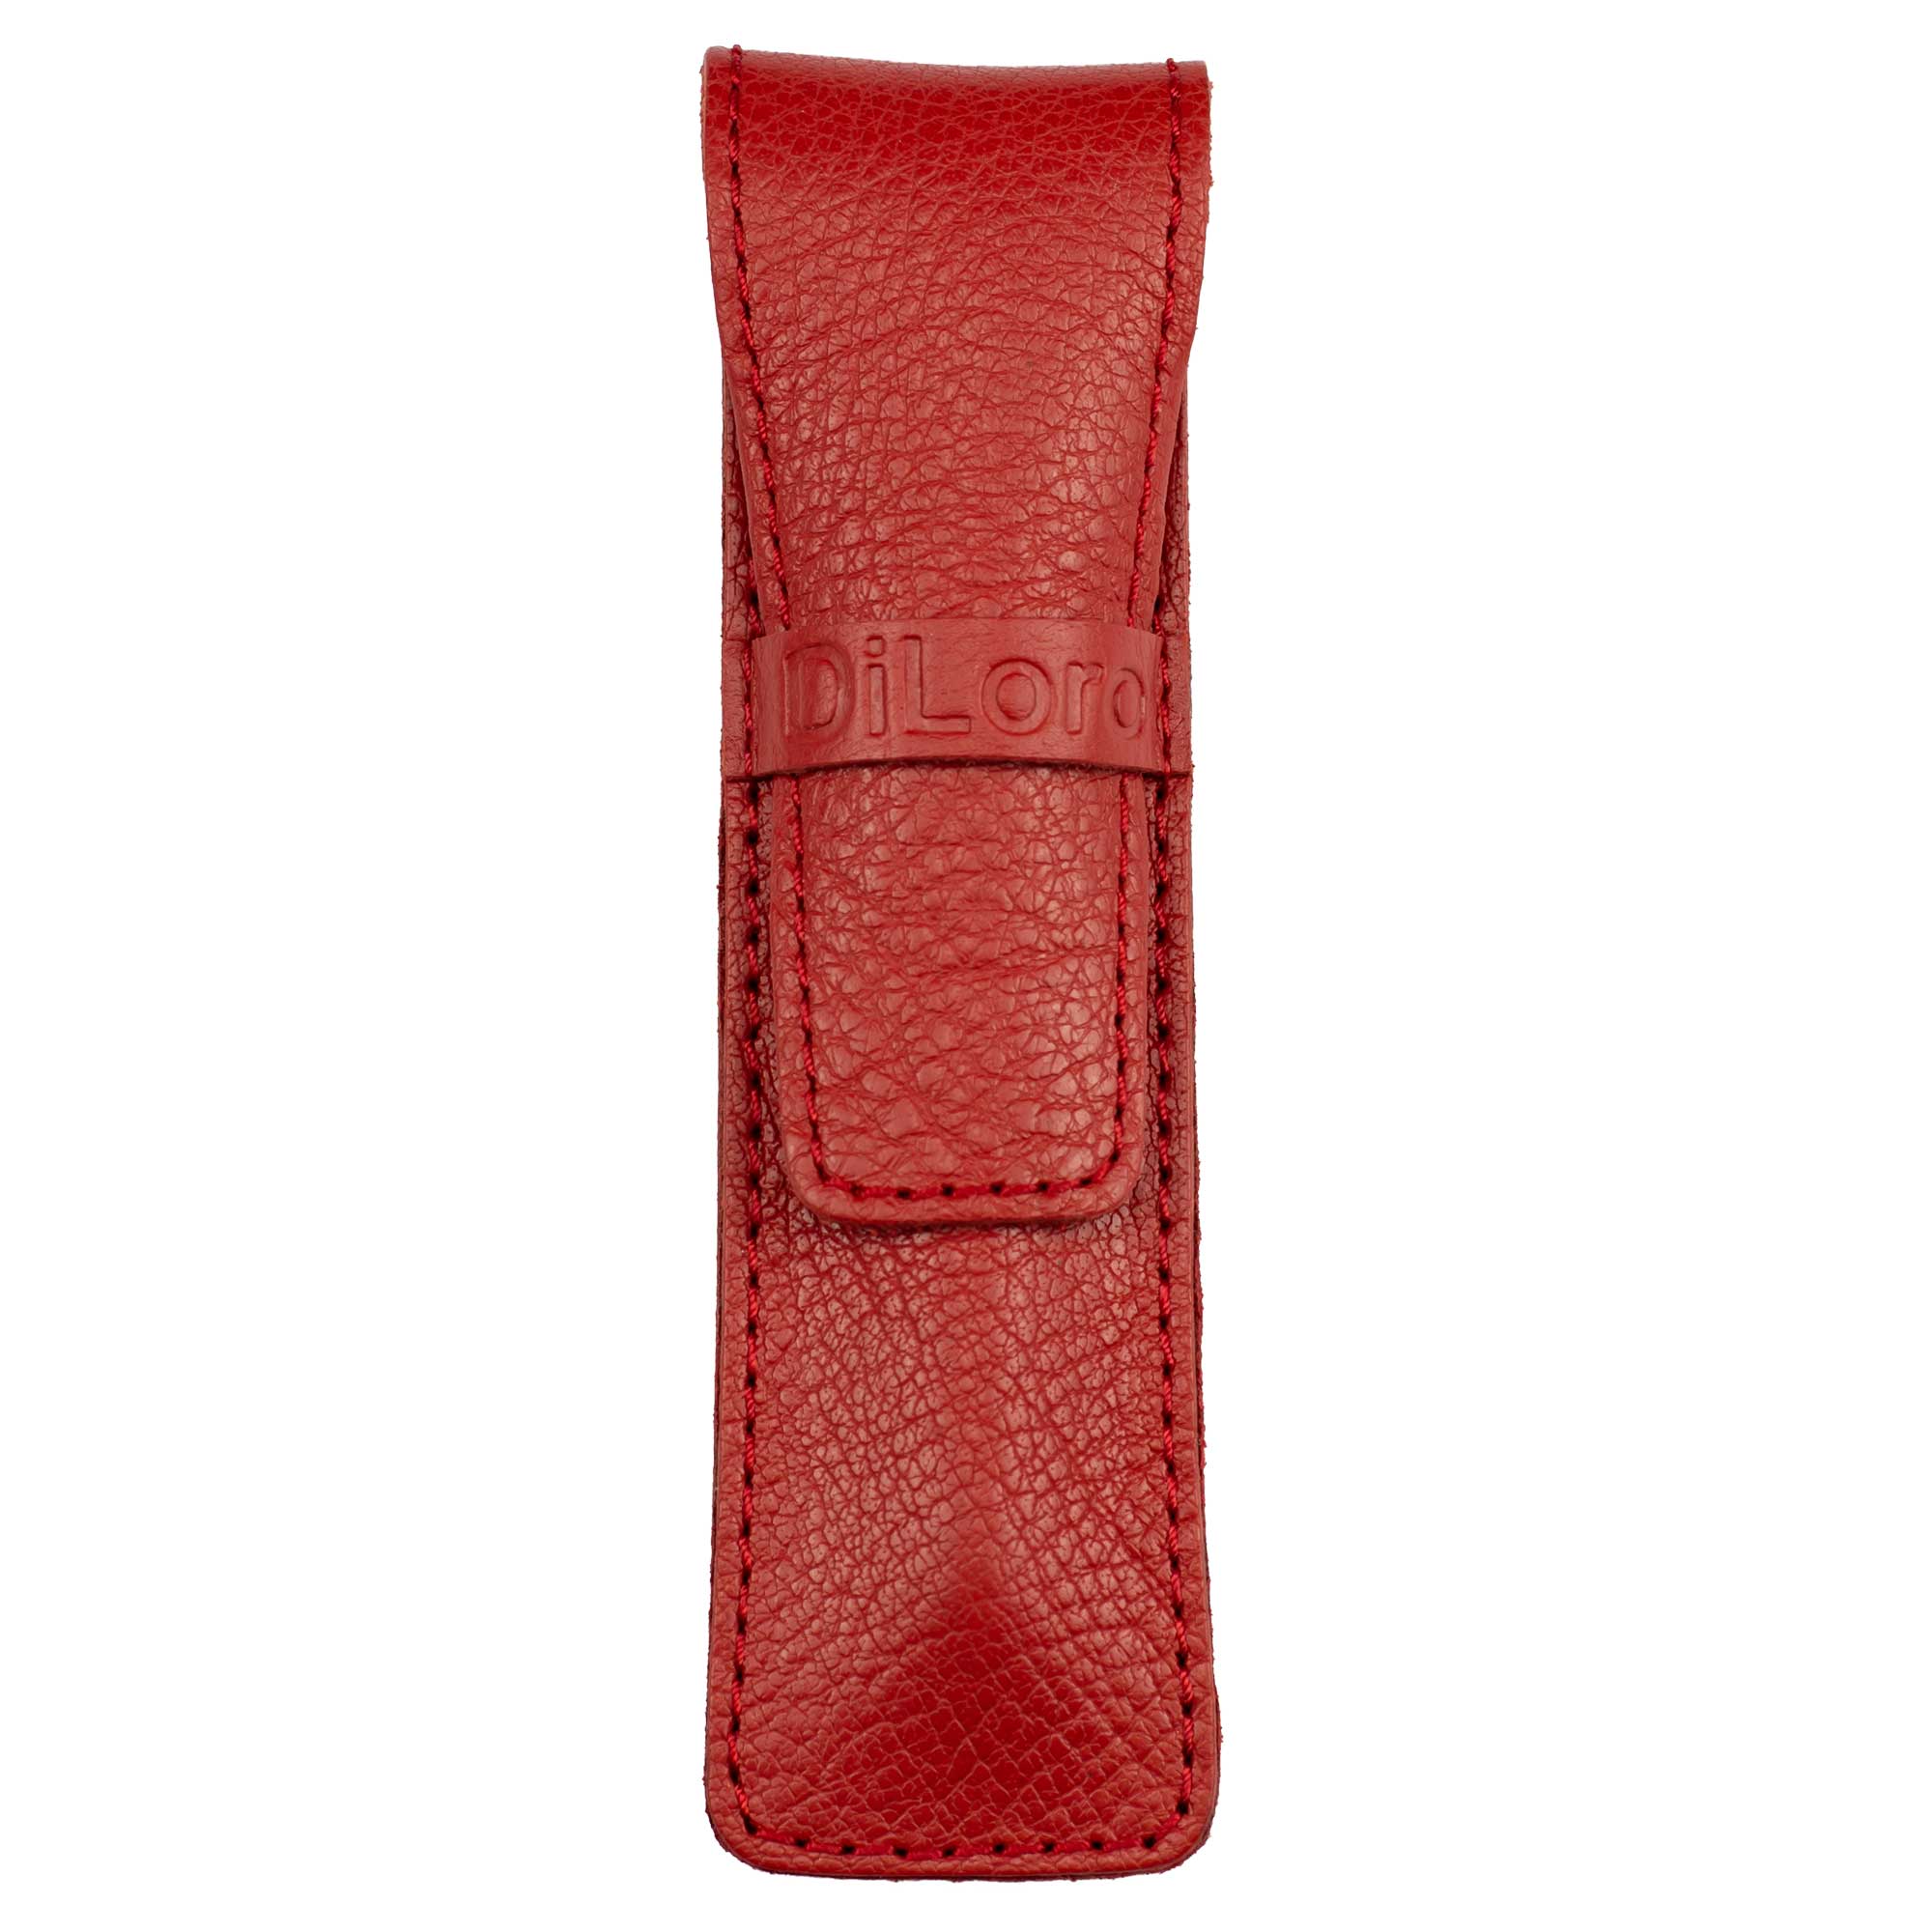 DiLoro Single Leather Pen Holder in Venetian Red, Full Grain Leather